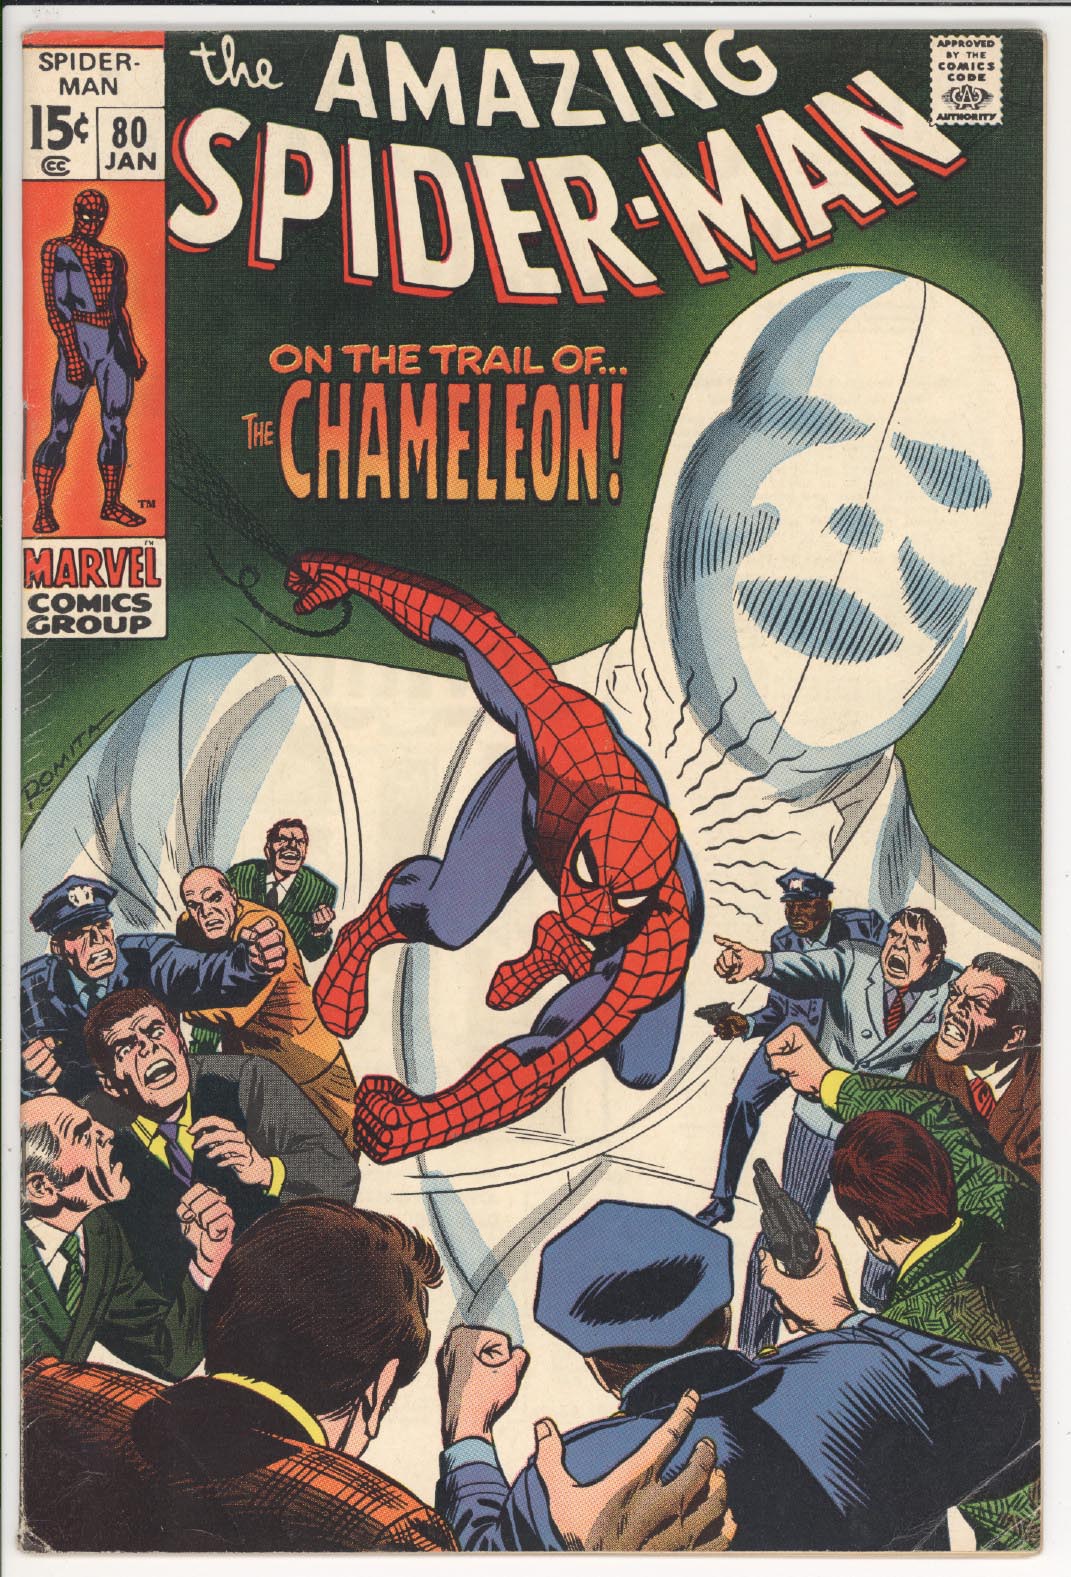 Amazing Spider-Man #80 front